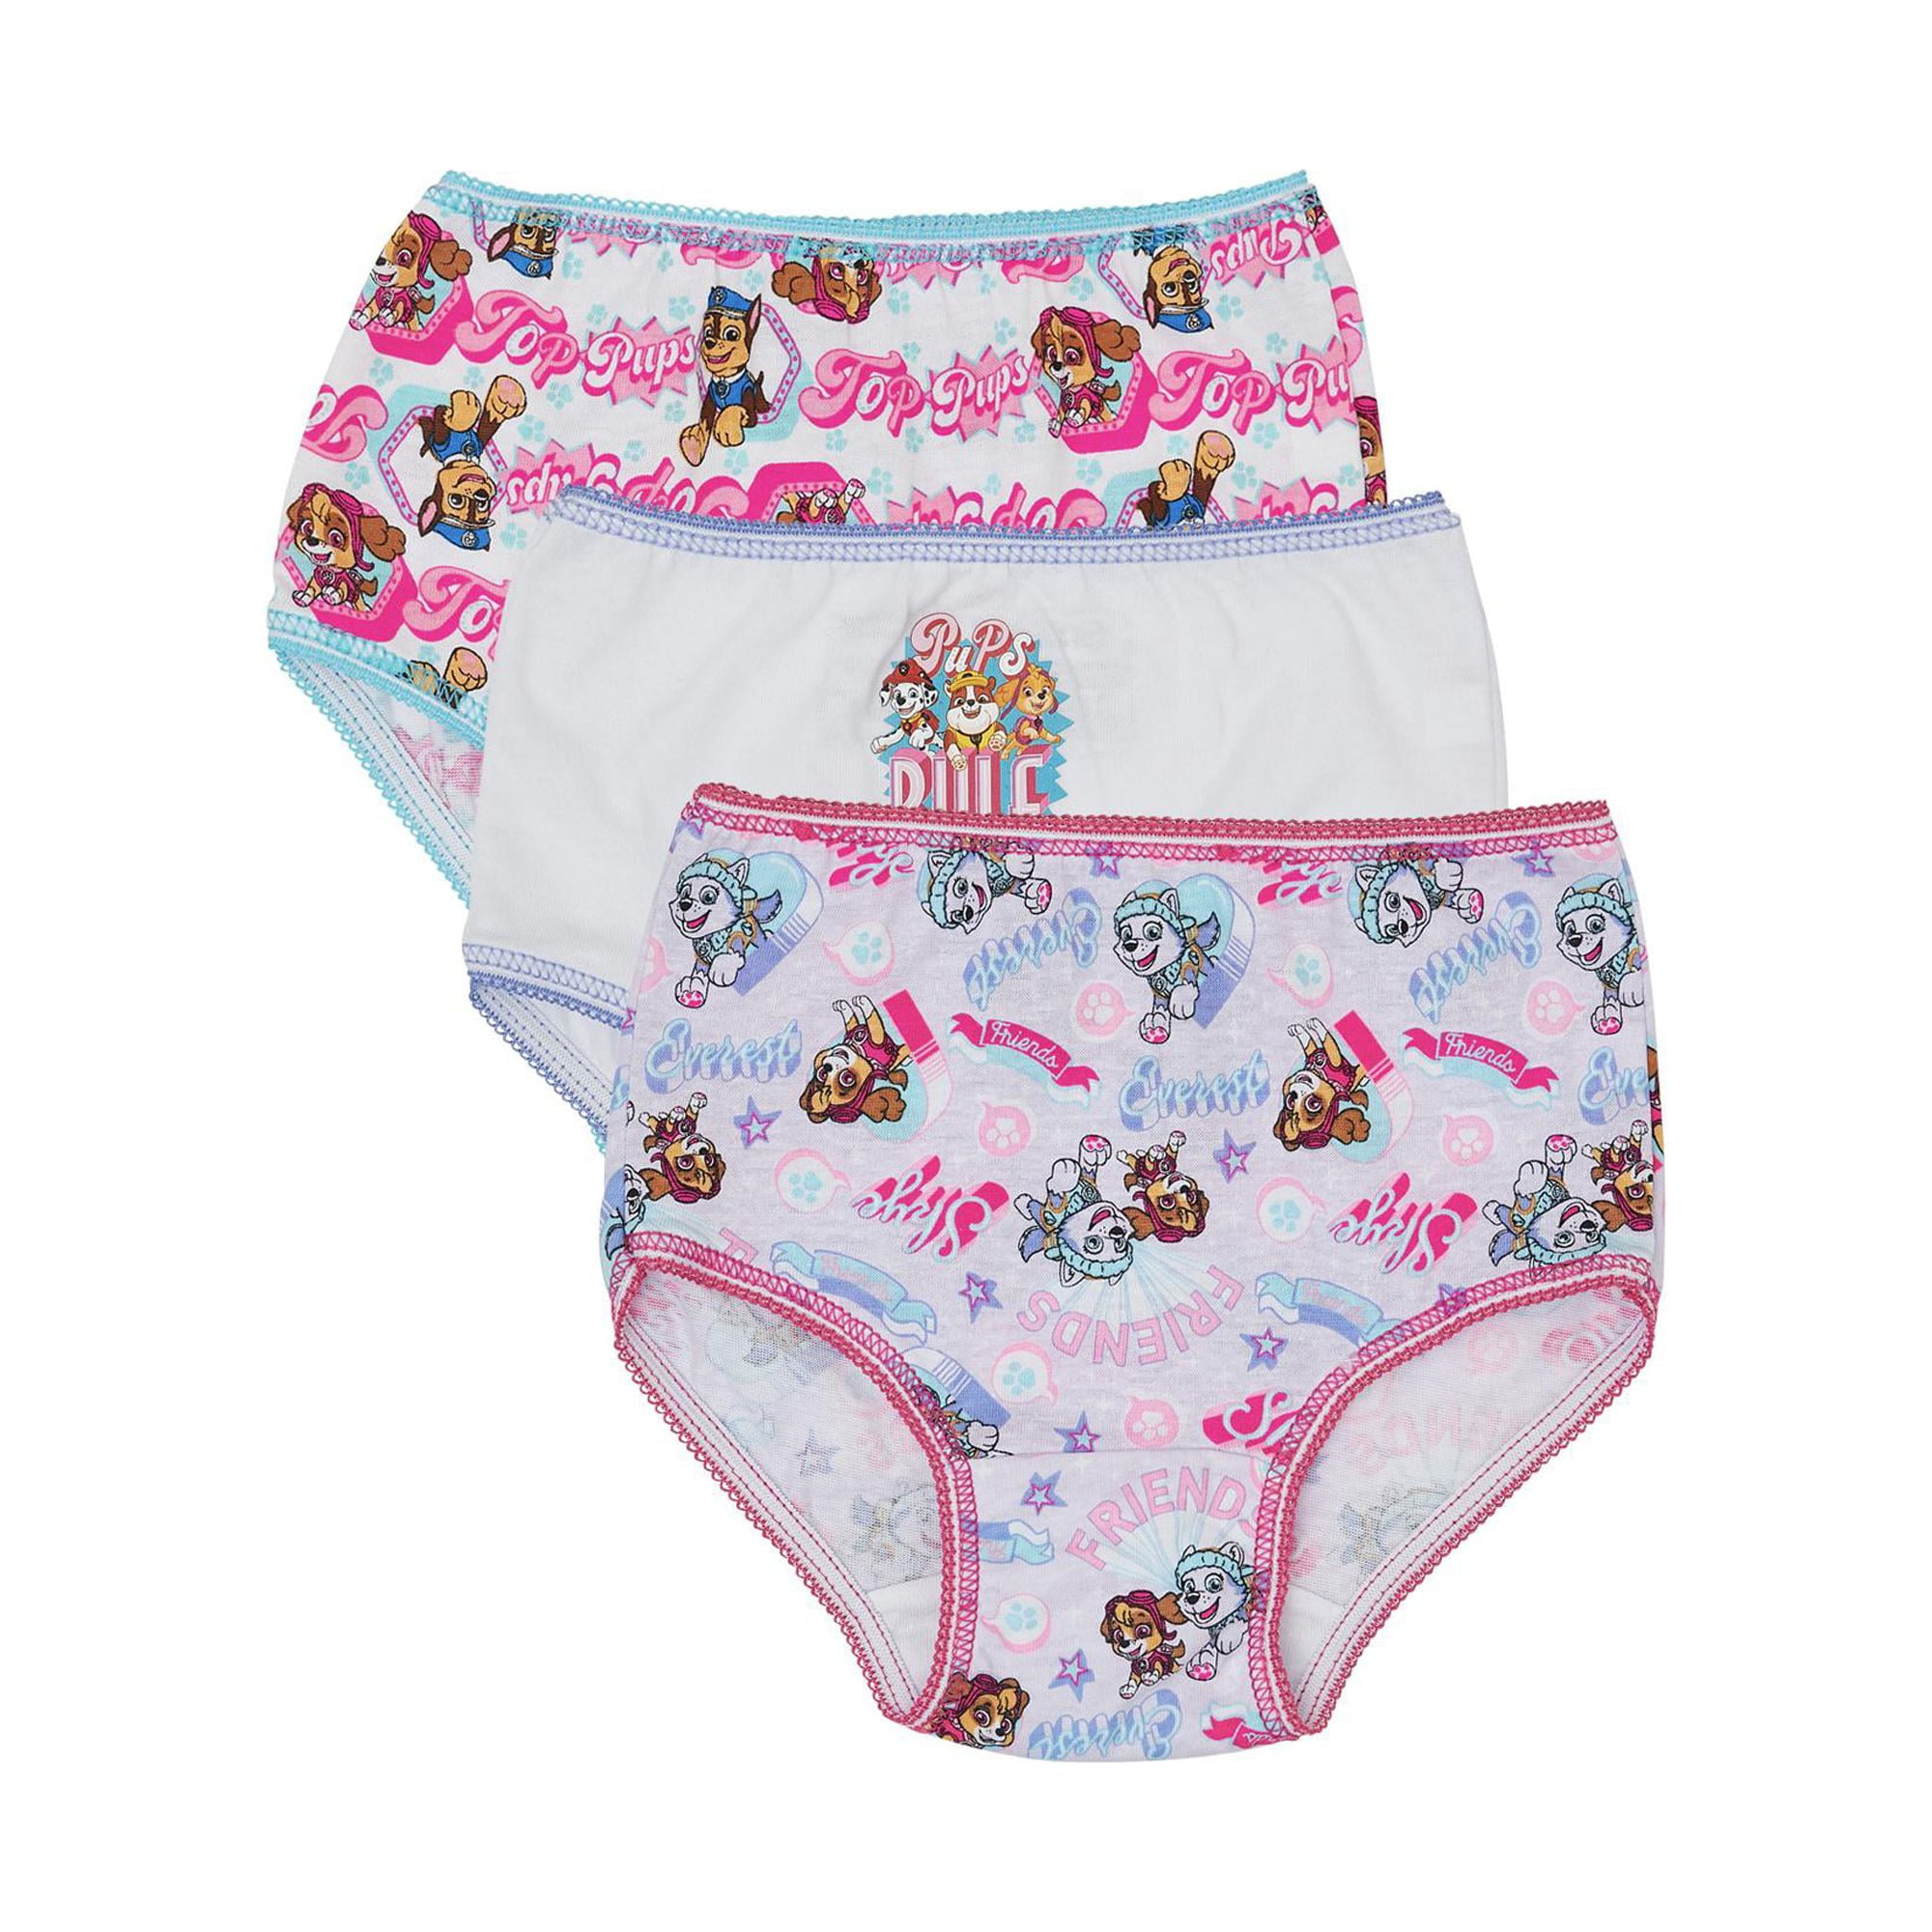 Paw Patrol Toddler Boys 2T-3T Underwear 7 pair Nickelodeon